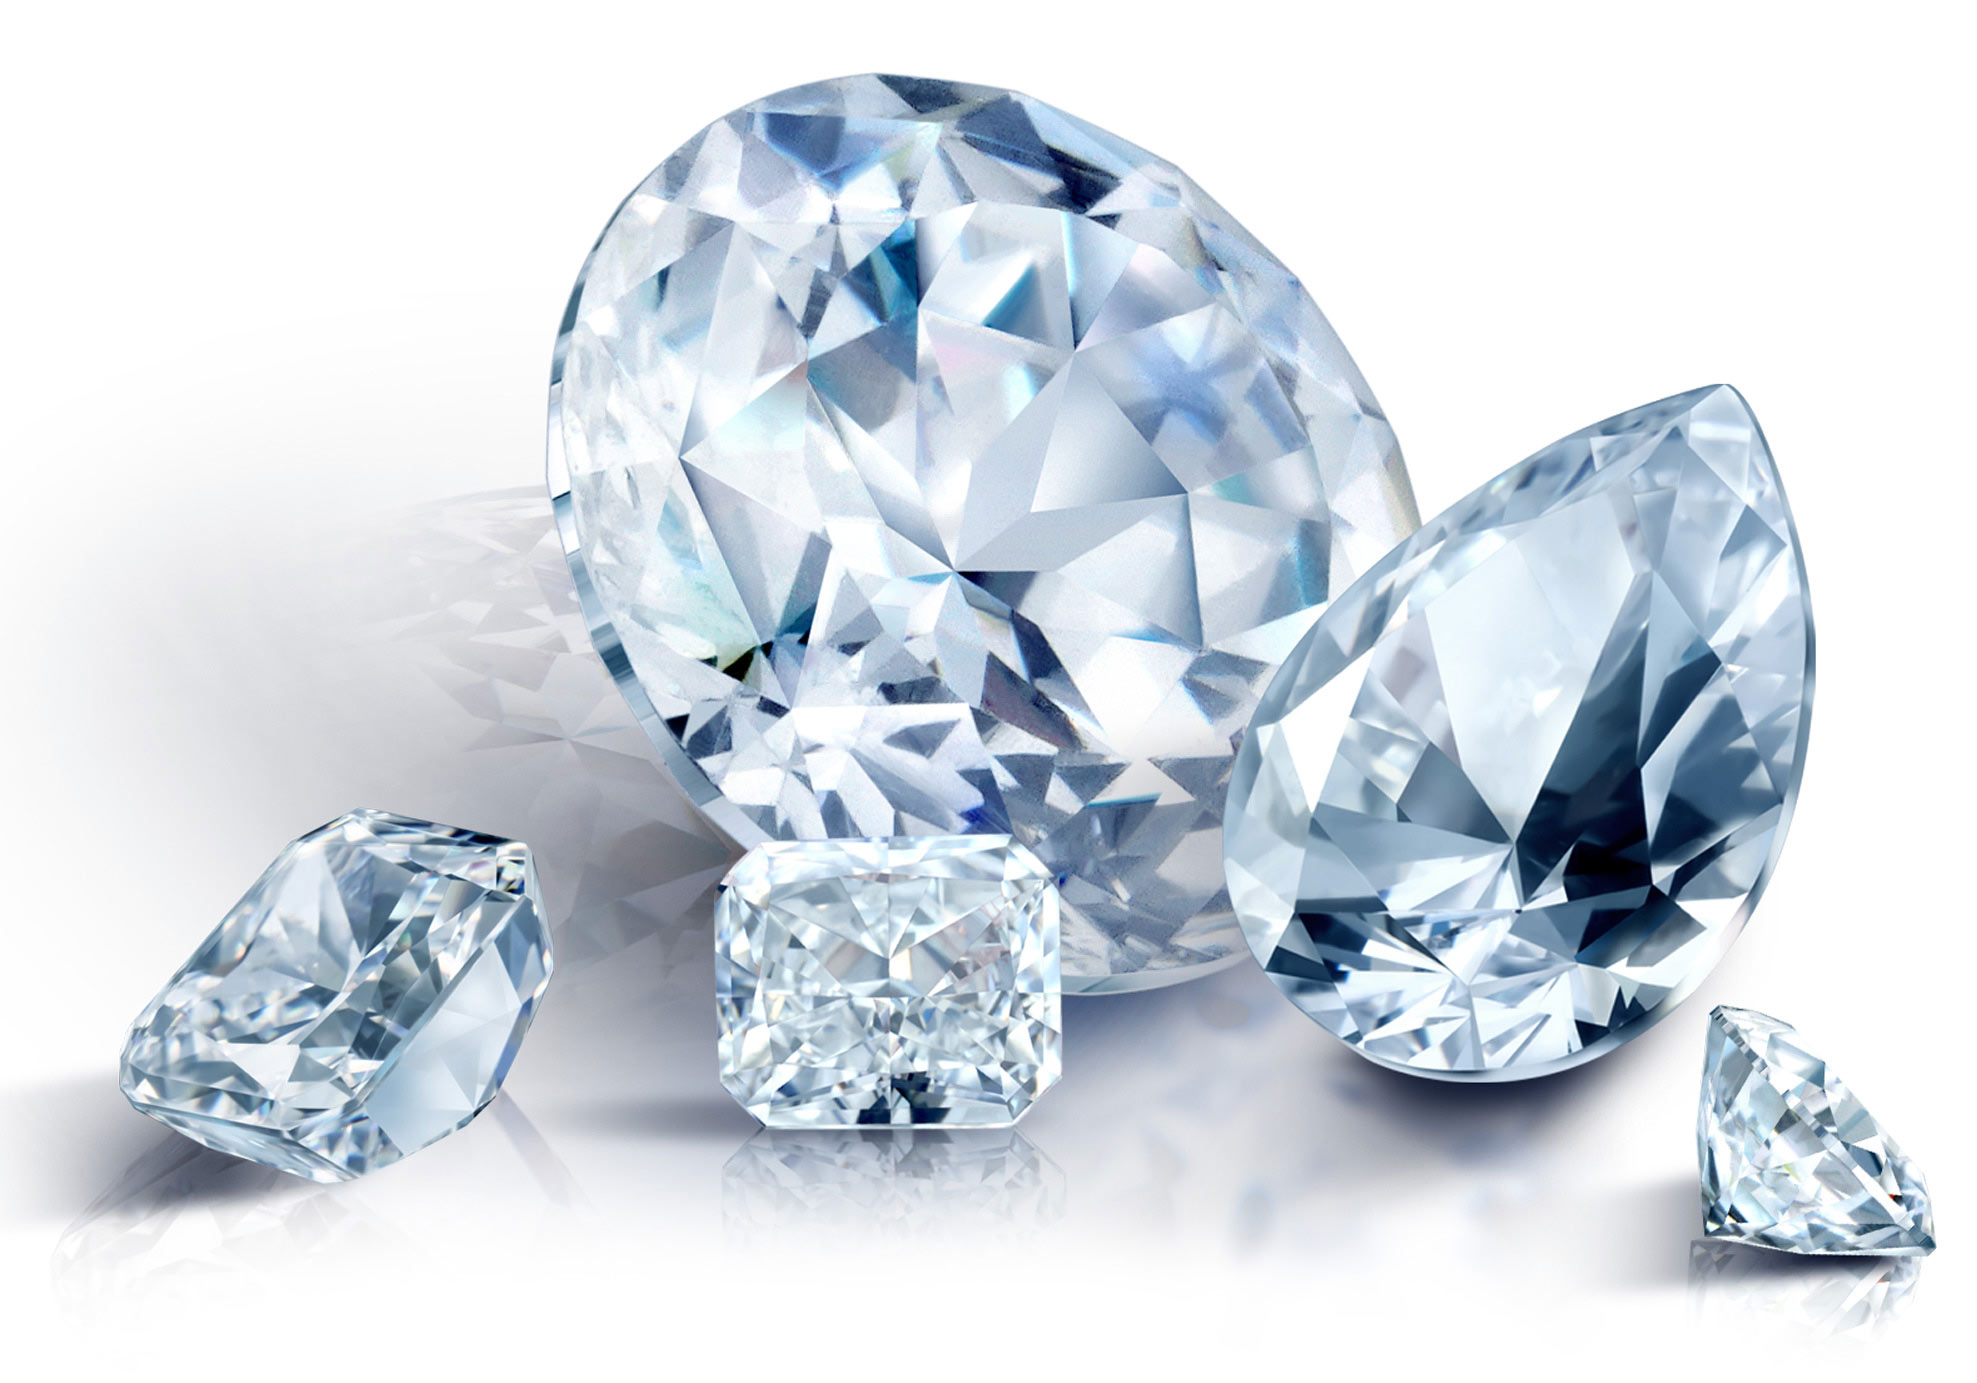 Artificial ice Diamonds from Maleras